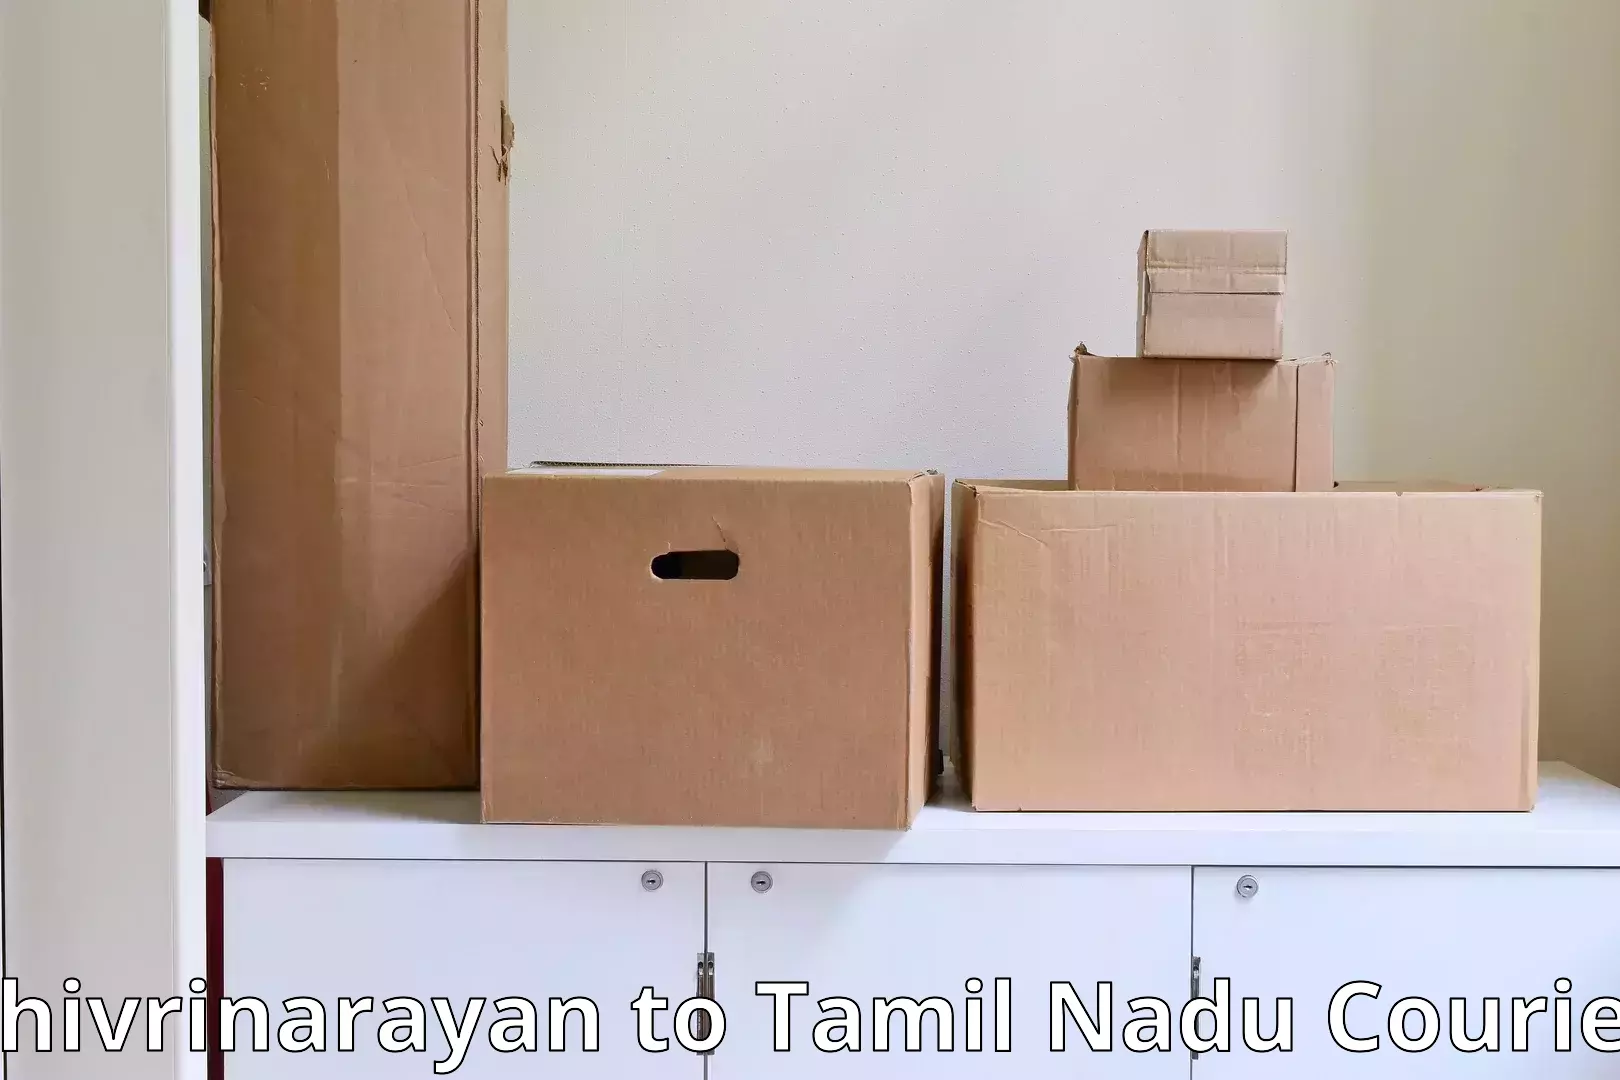 Moving and storage services Shivrinarayan to Manamadurai